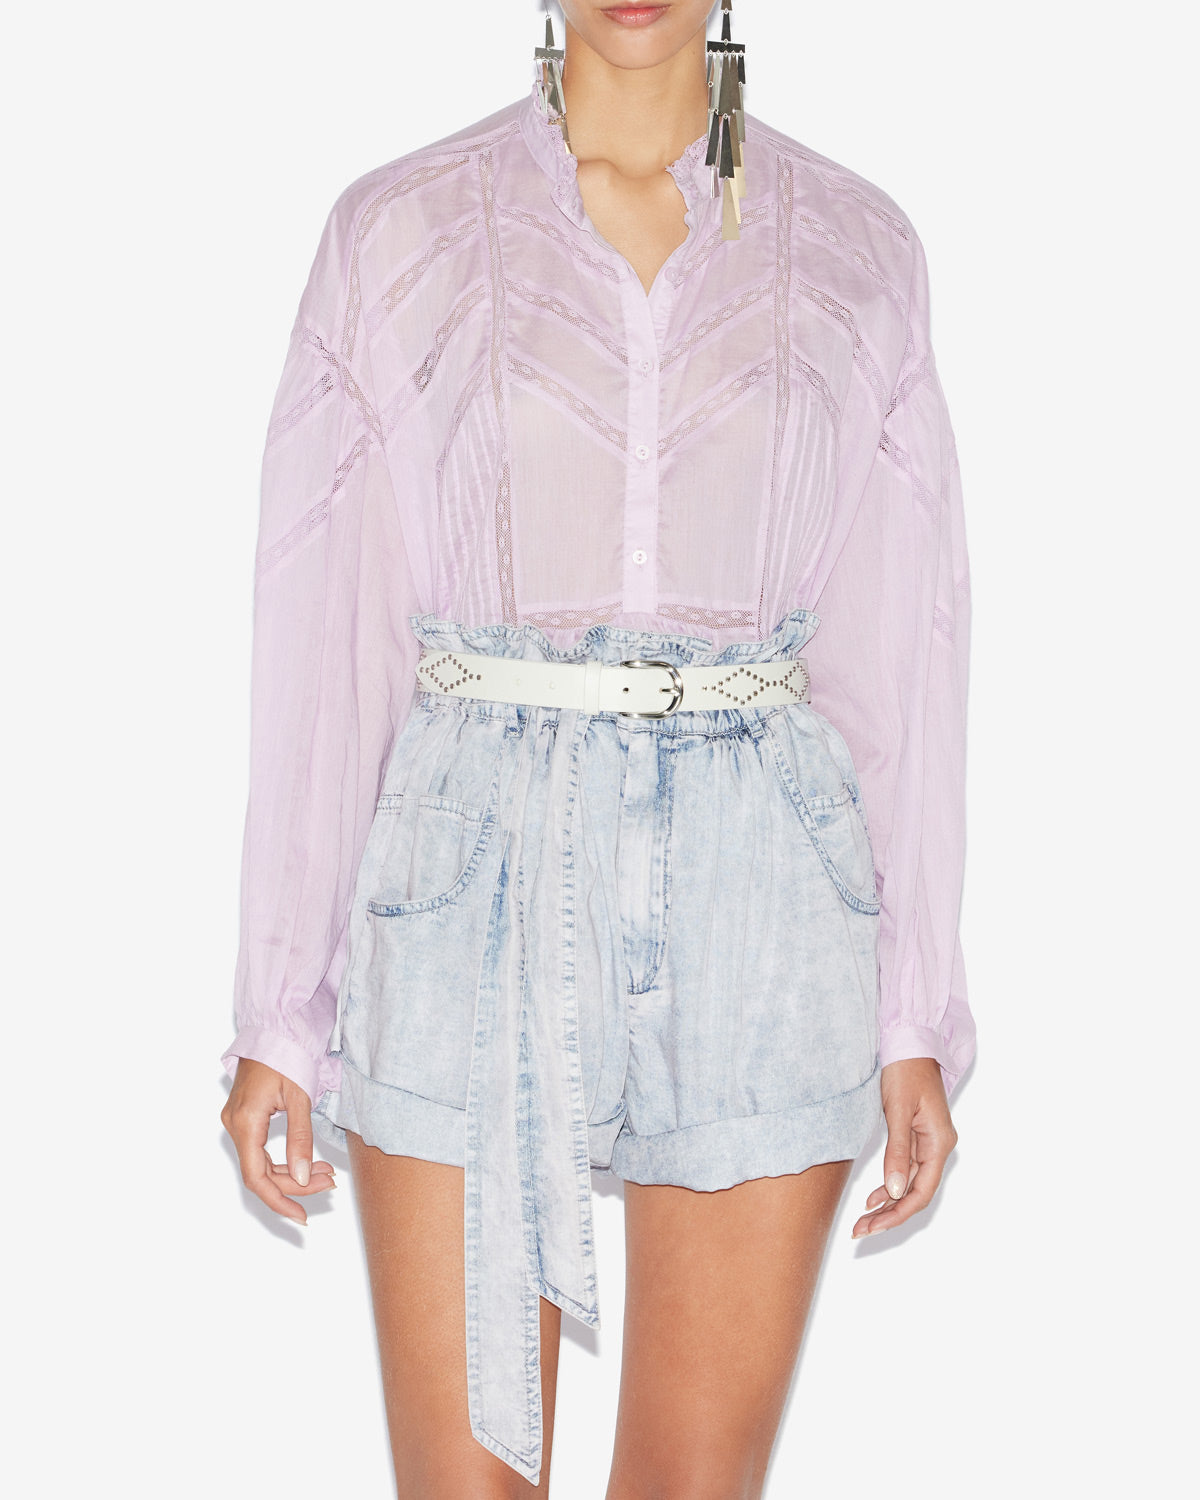 Gelma blouse Woman Lilac 5